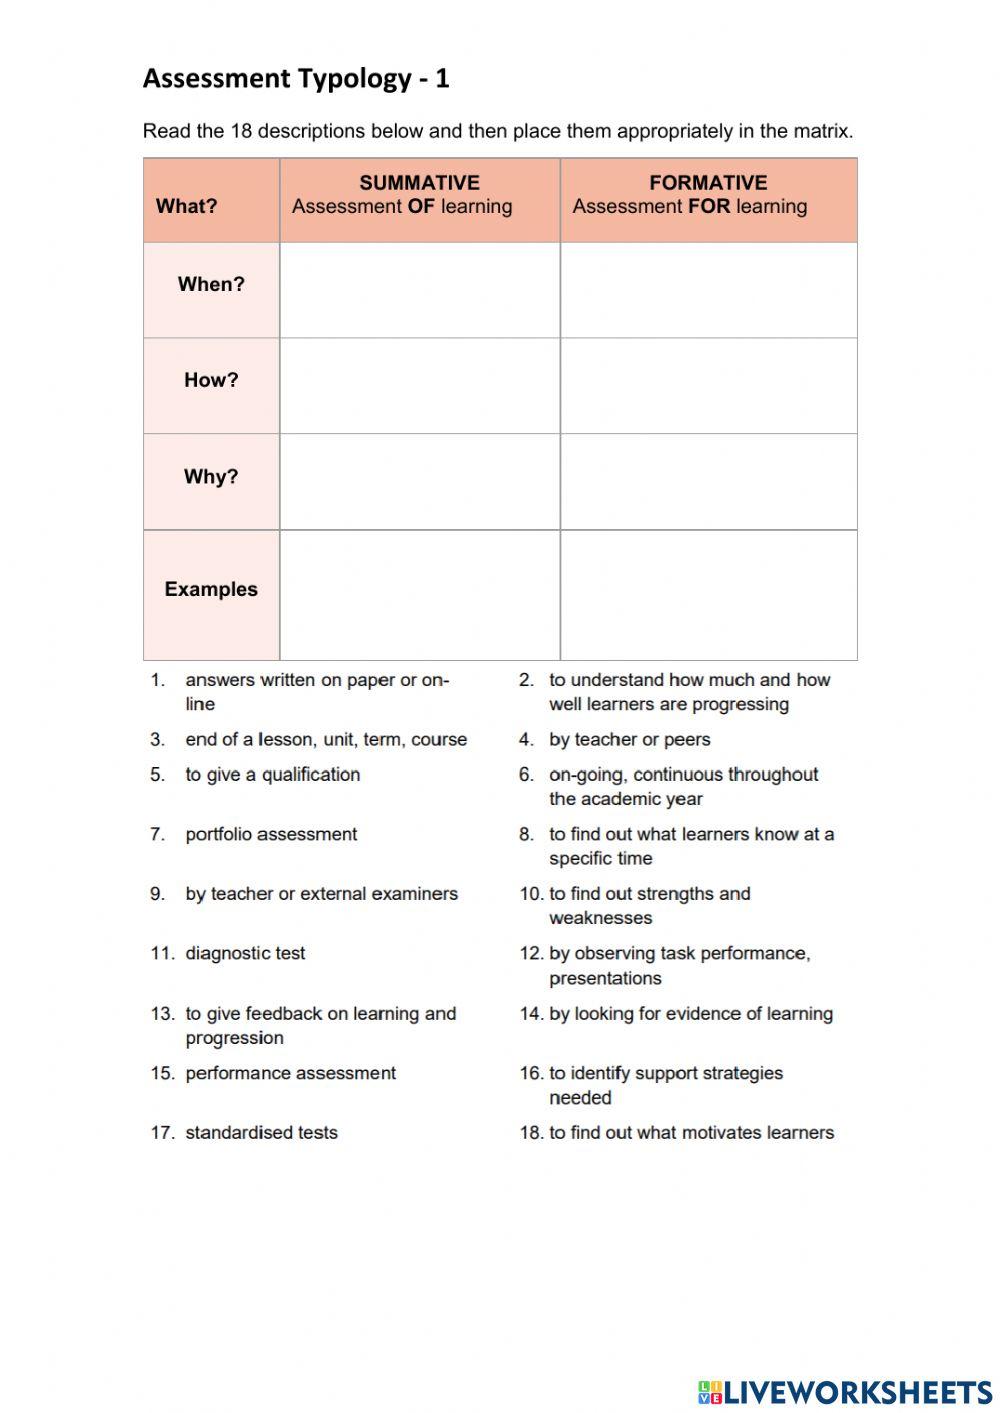 Assessment types 1